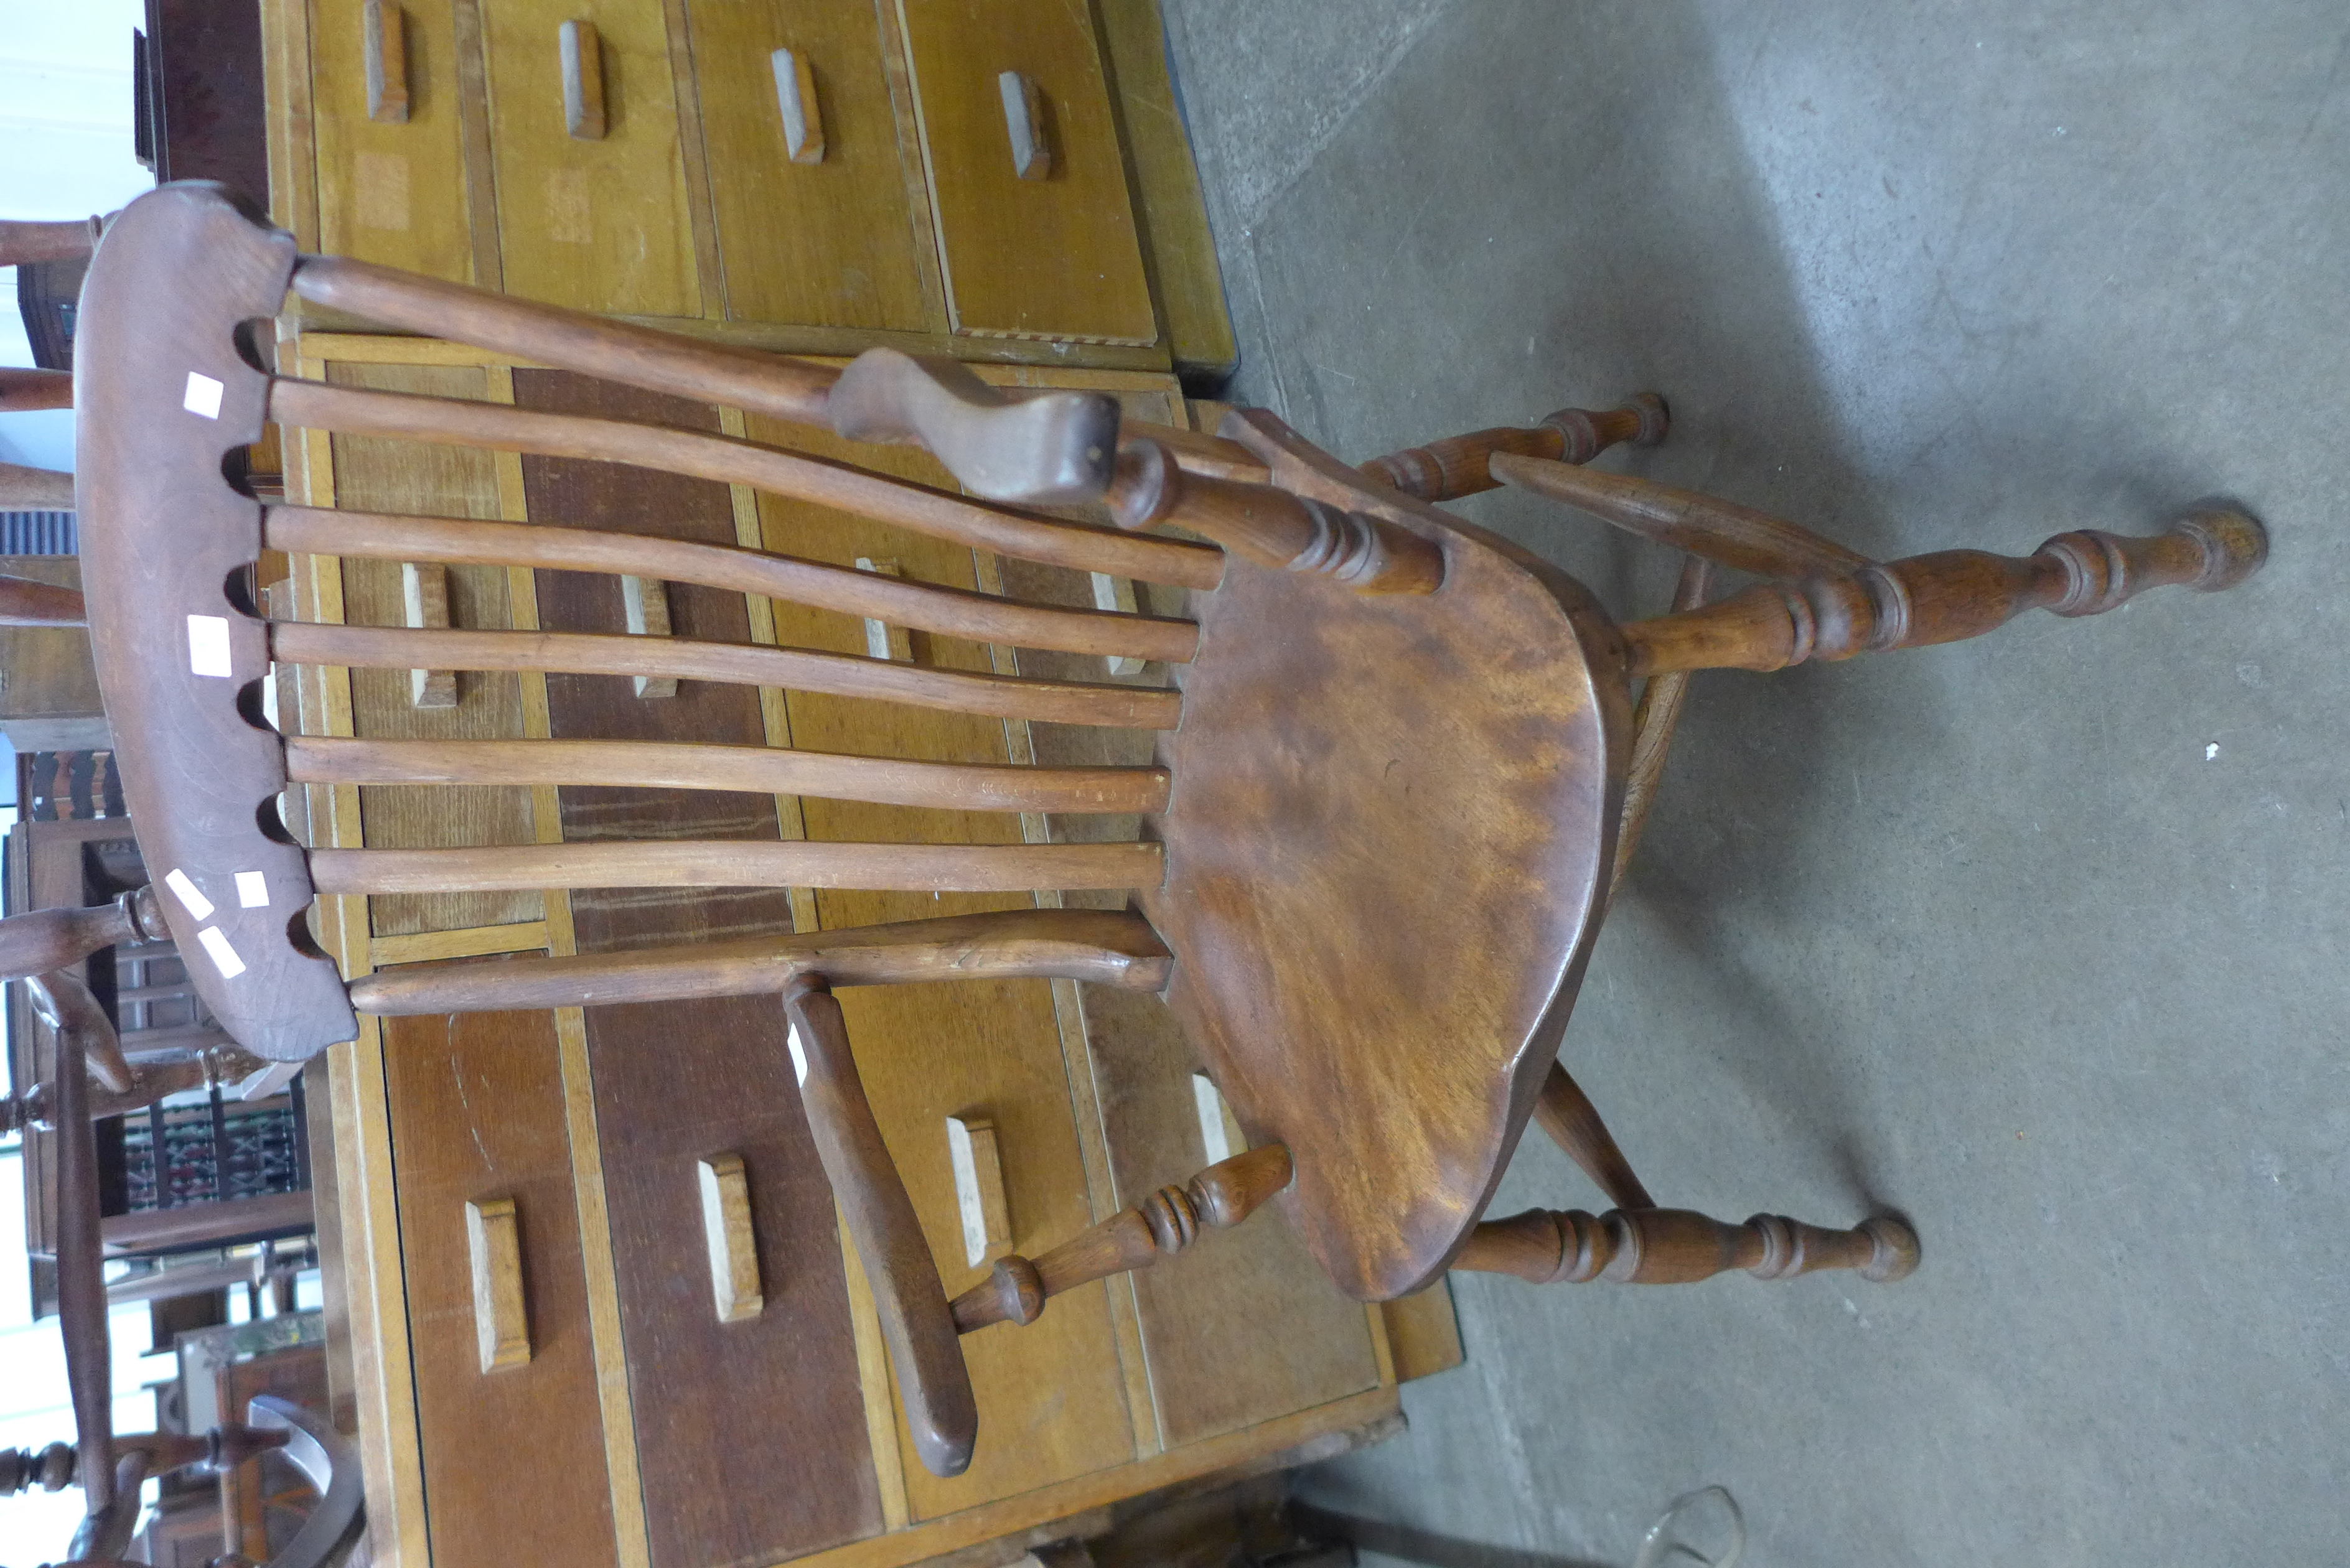 A Victorian elm and beech farmhouse chair